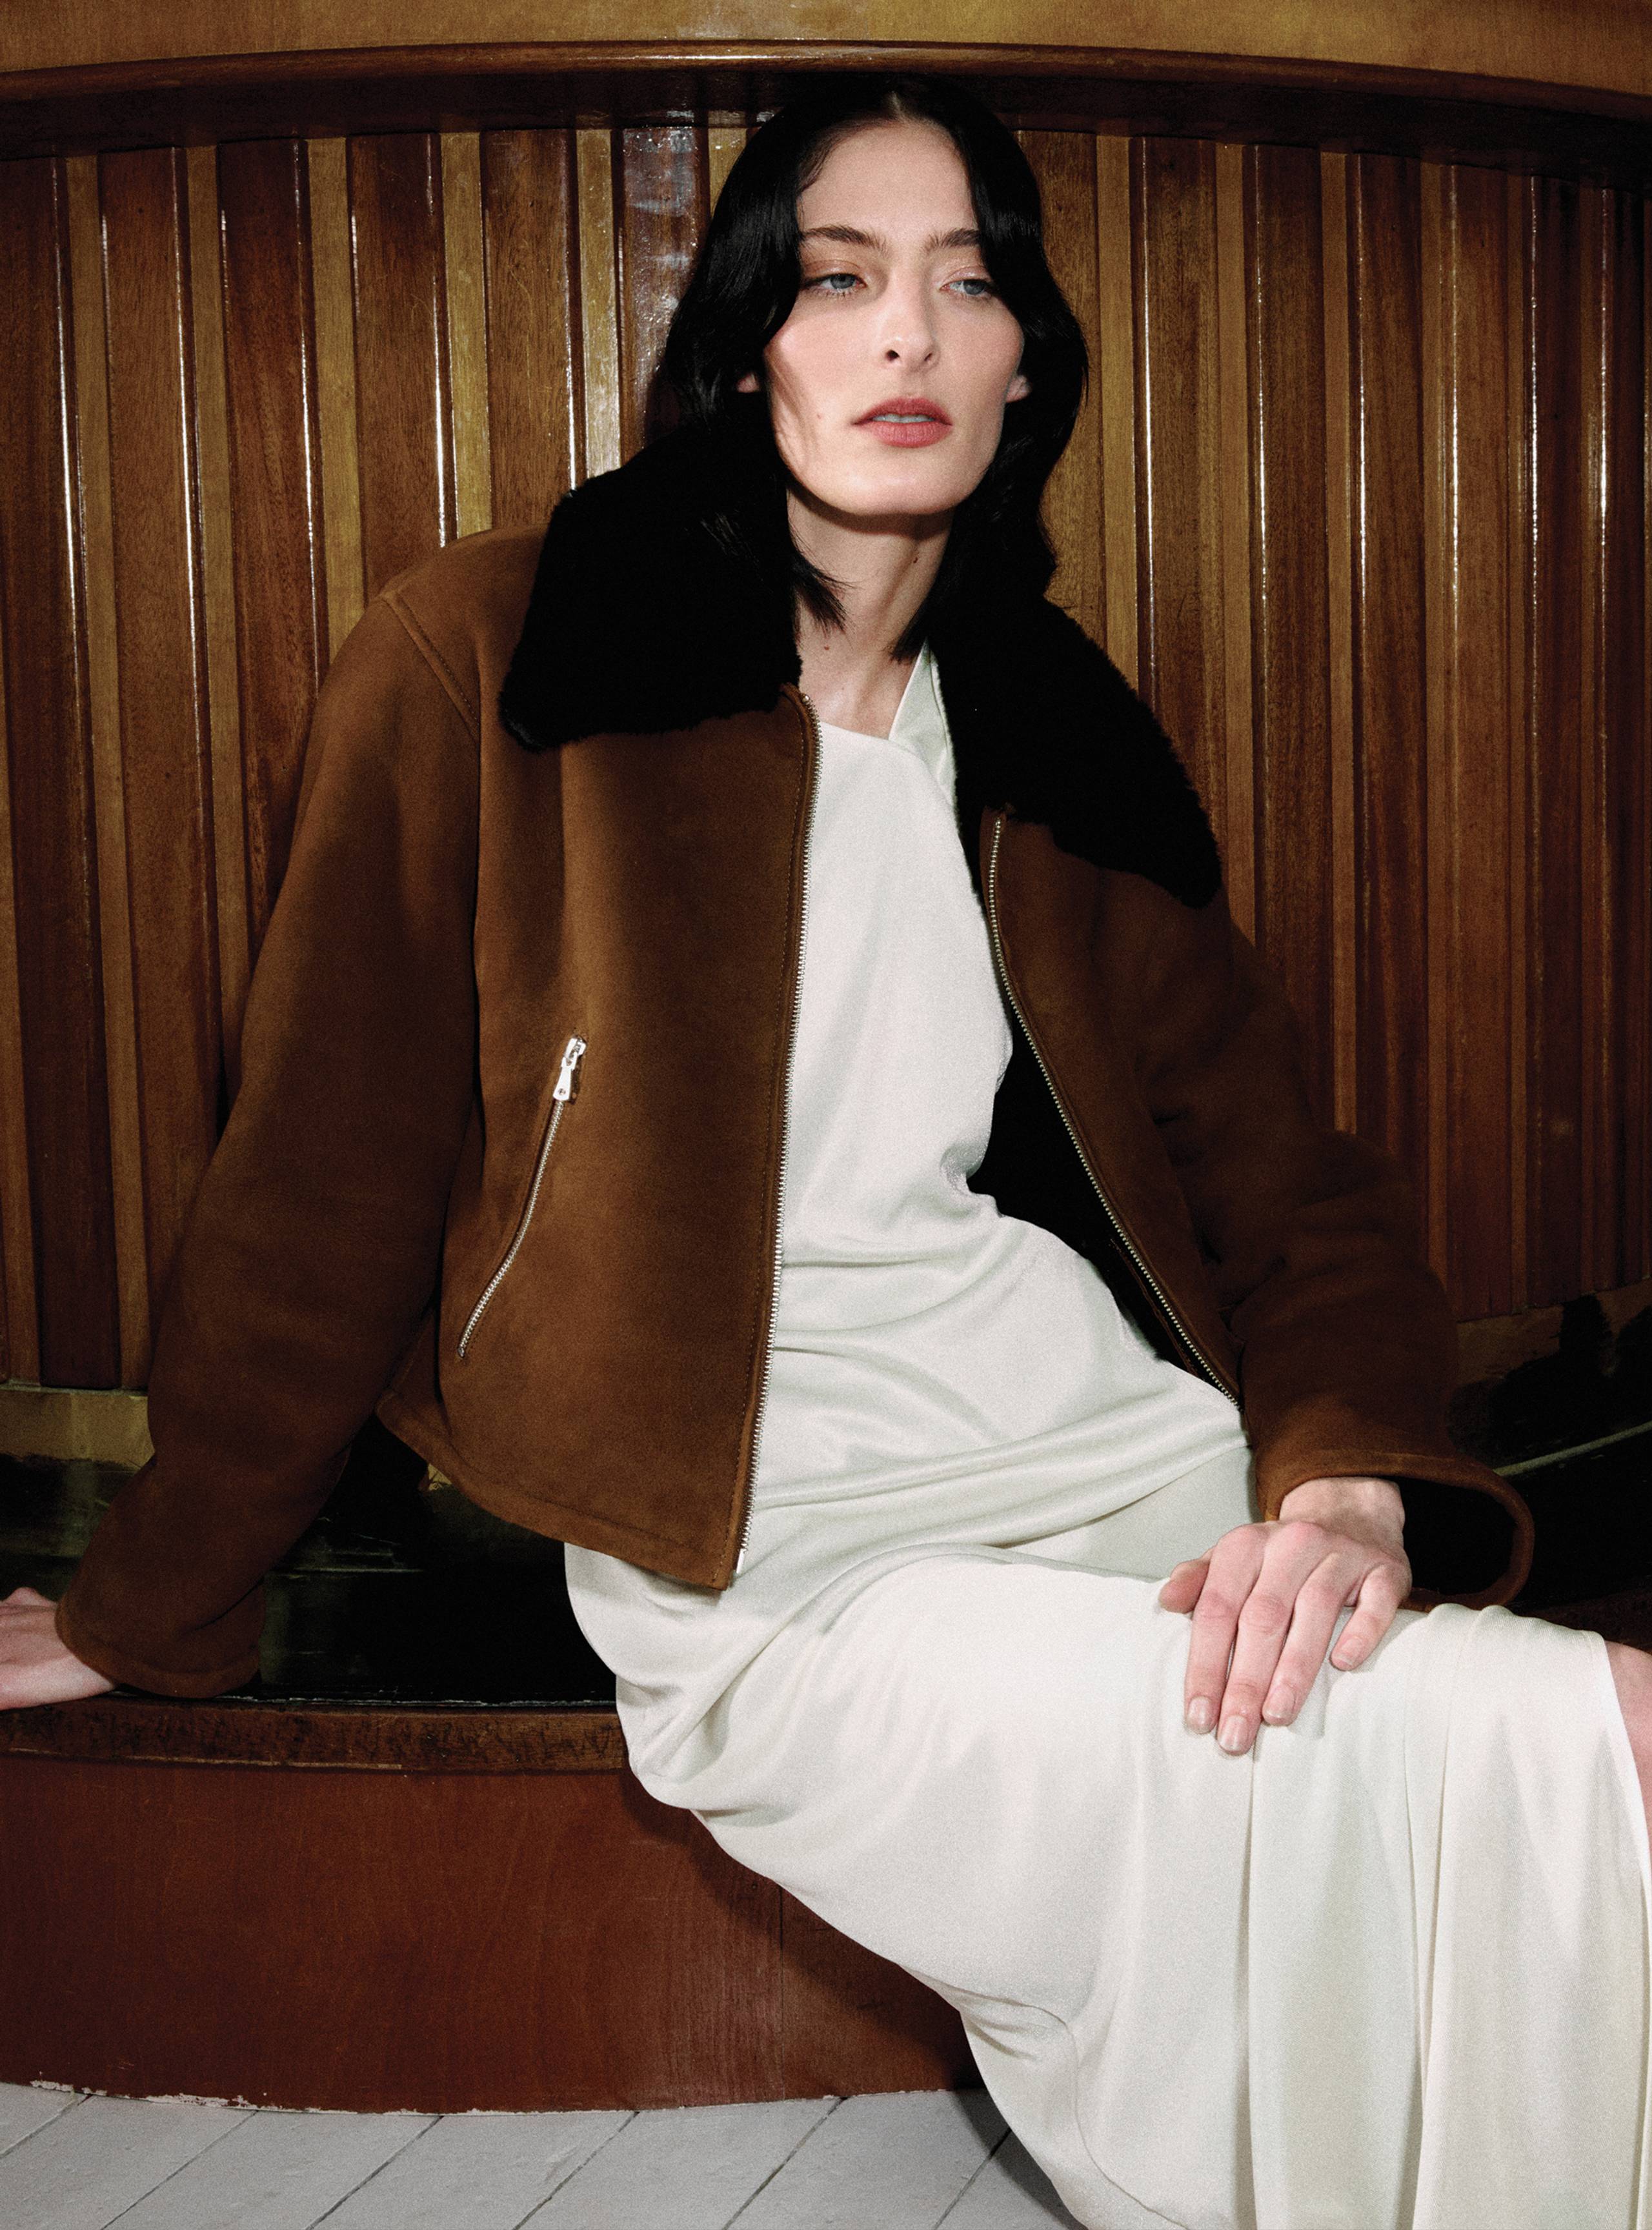 A model sitting on a bench wearing the Nyla Cognac Black jacket